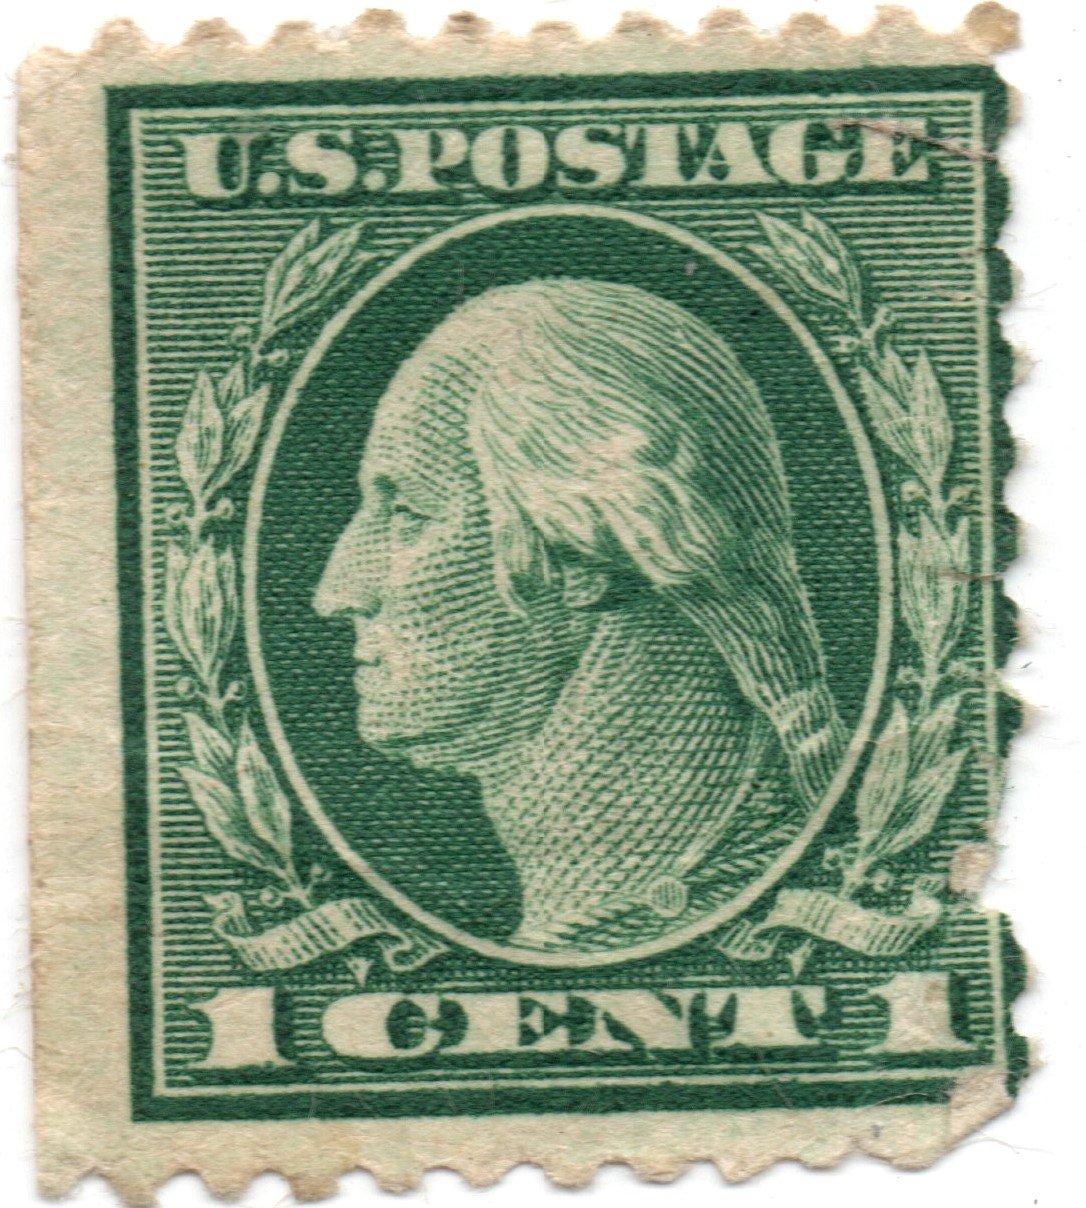 1 cent george washington stamp otter x4